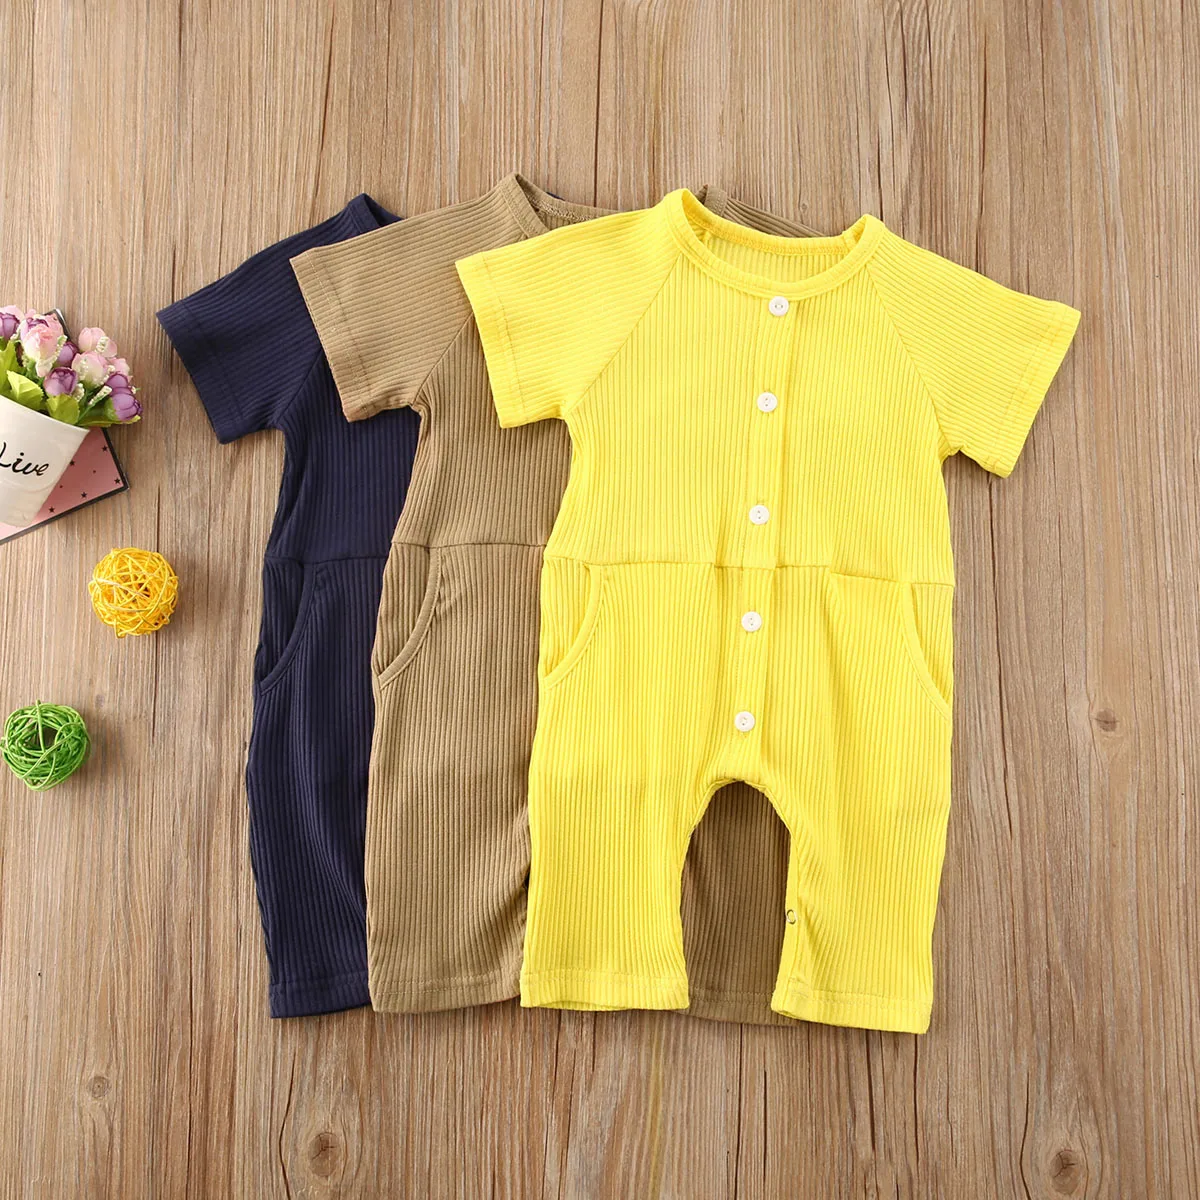 

Pudcoco Newborn Baby Girls Boys Romper 2020 Summer New Short Sleeve Playsuit Soft Cotton Soild Color Jumpsuit for Infant